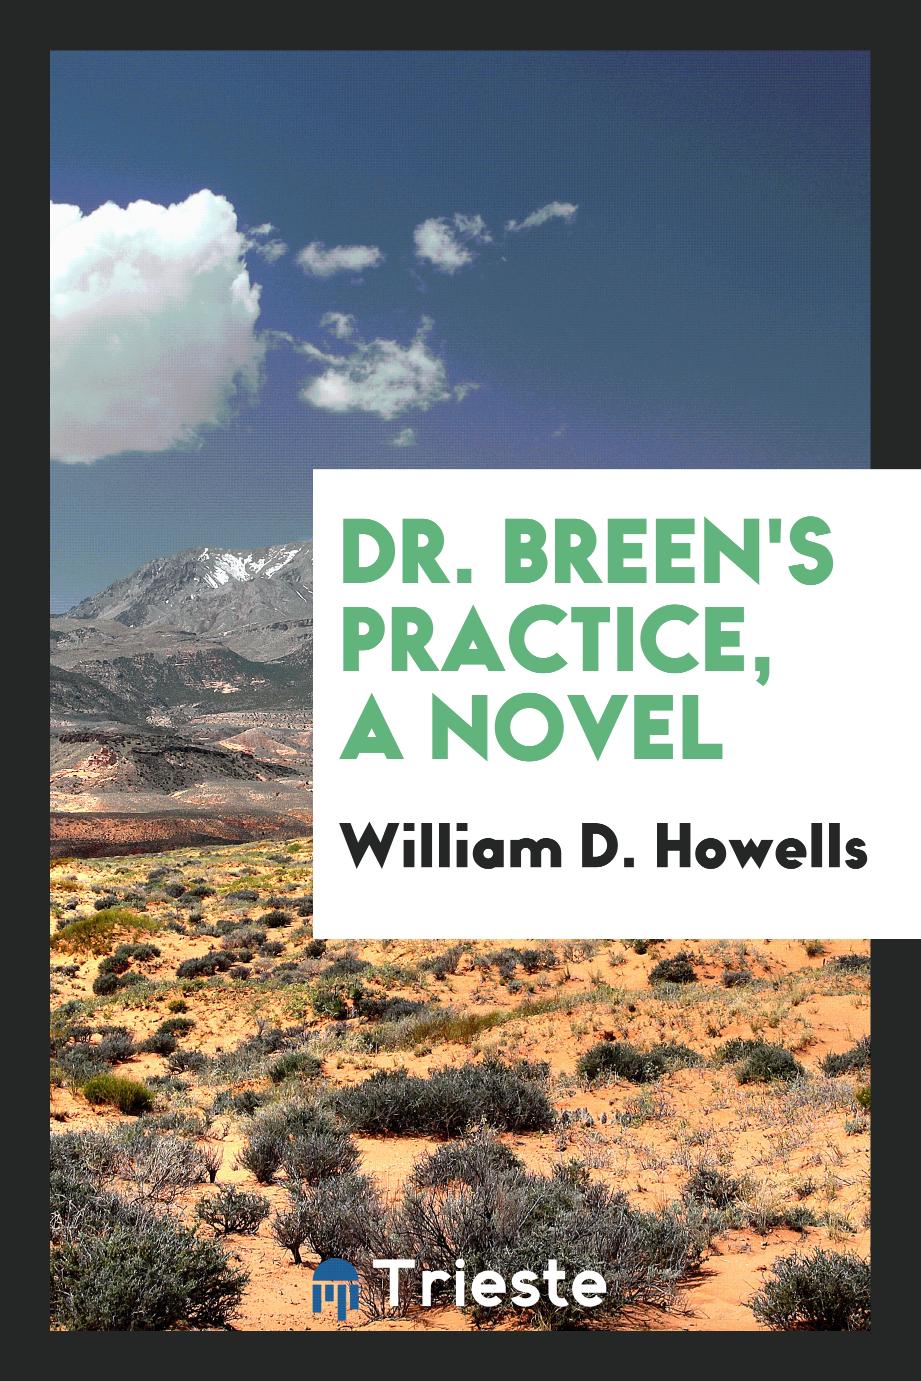 Dr. Breen's practice, a novel